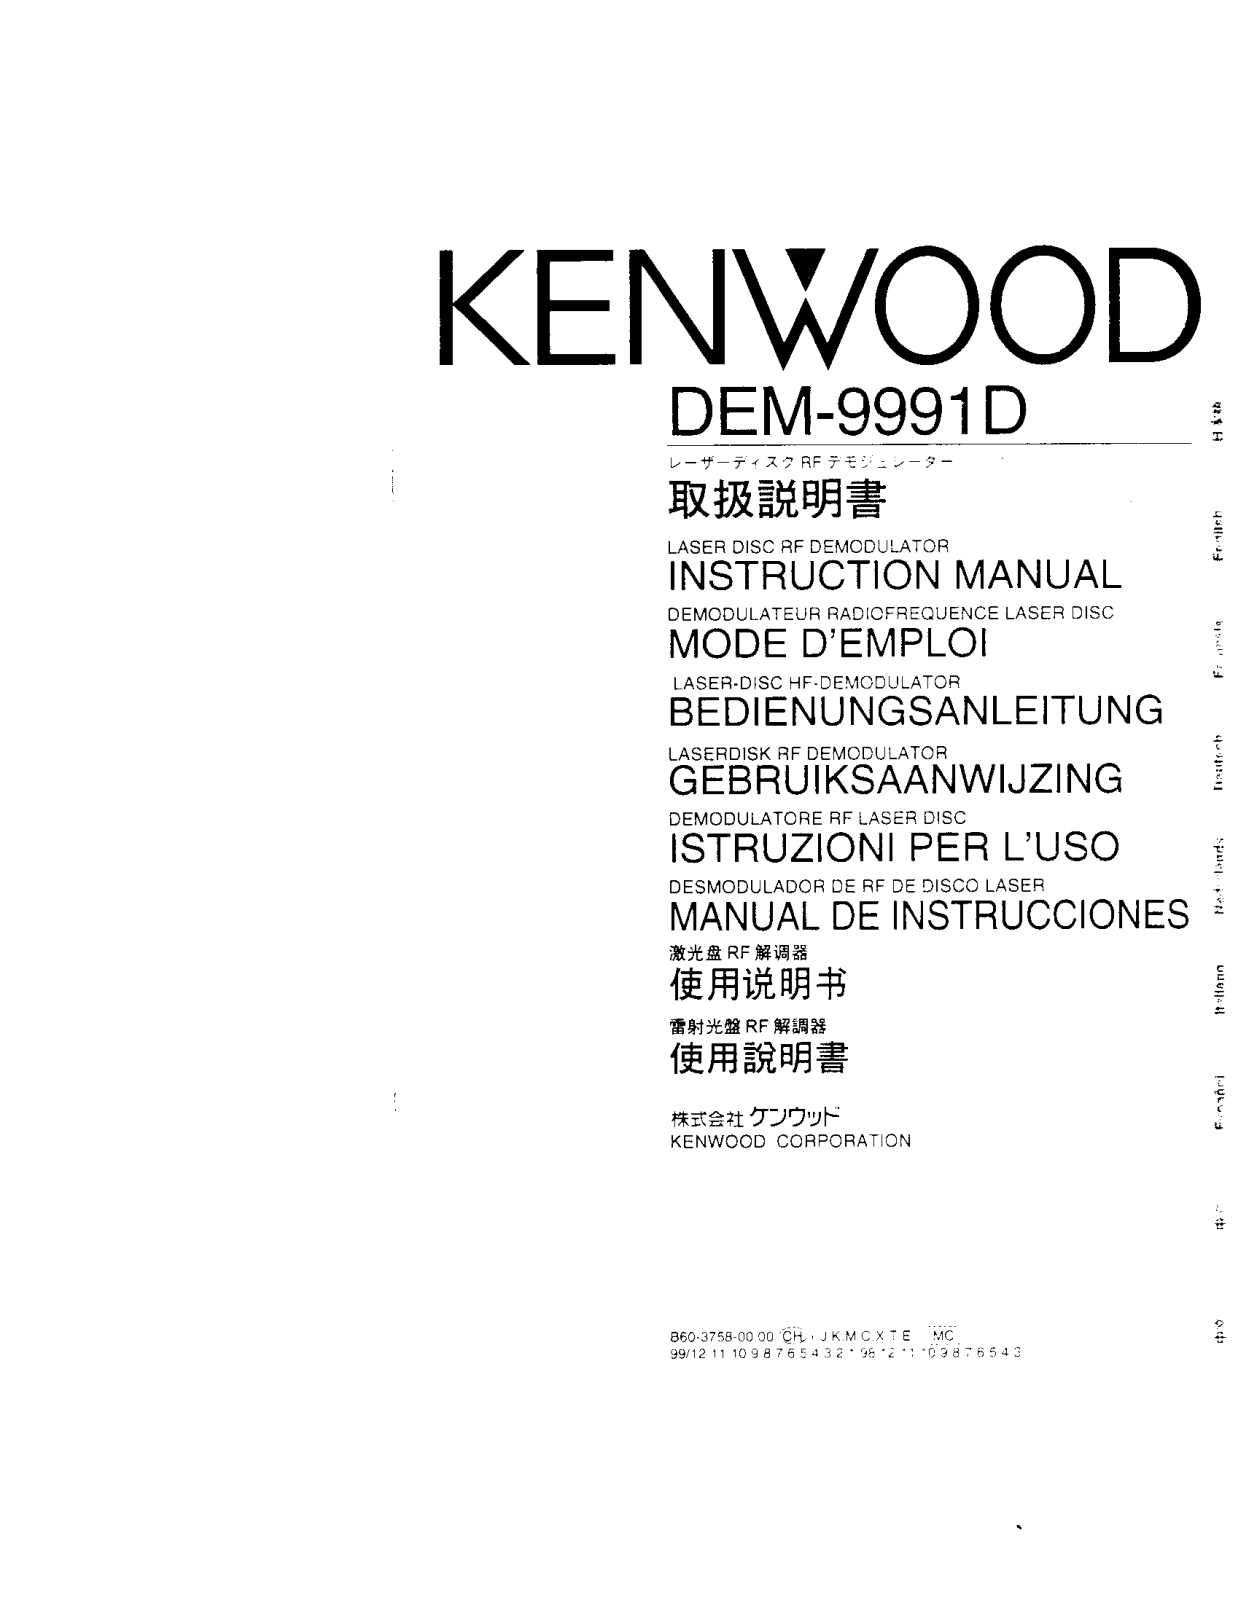 Kenwood DEM-9991D Owner's Manual